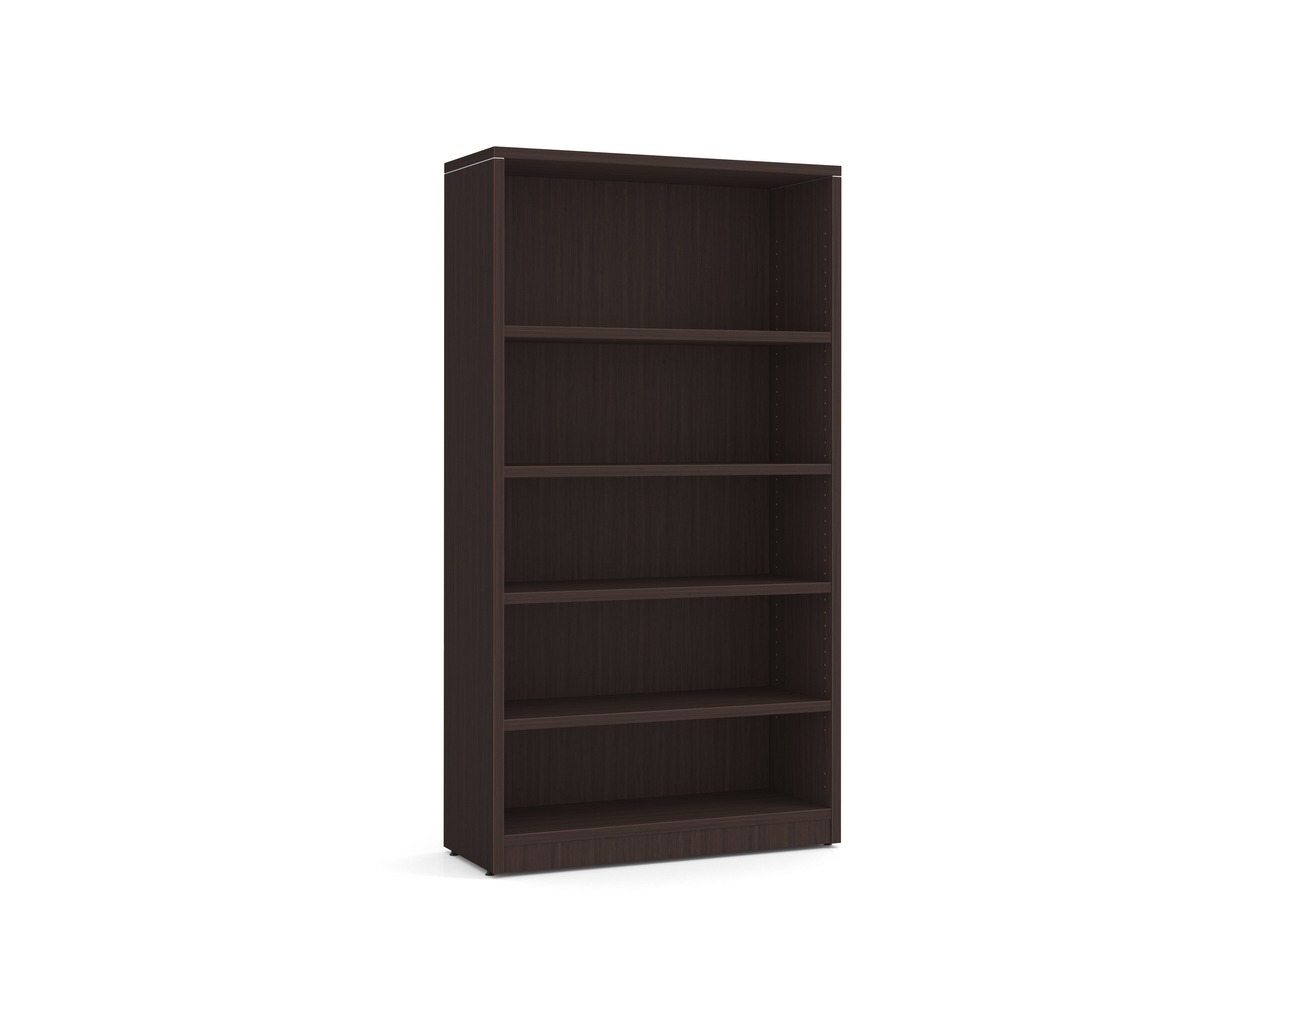 Heavy Duty Bookshelves – 5 Shelf in Espresso